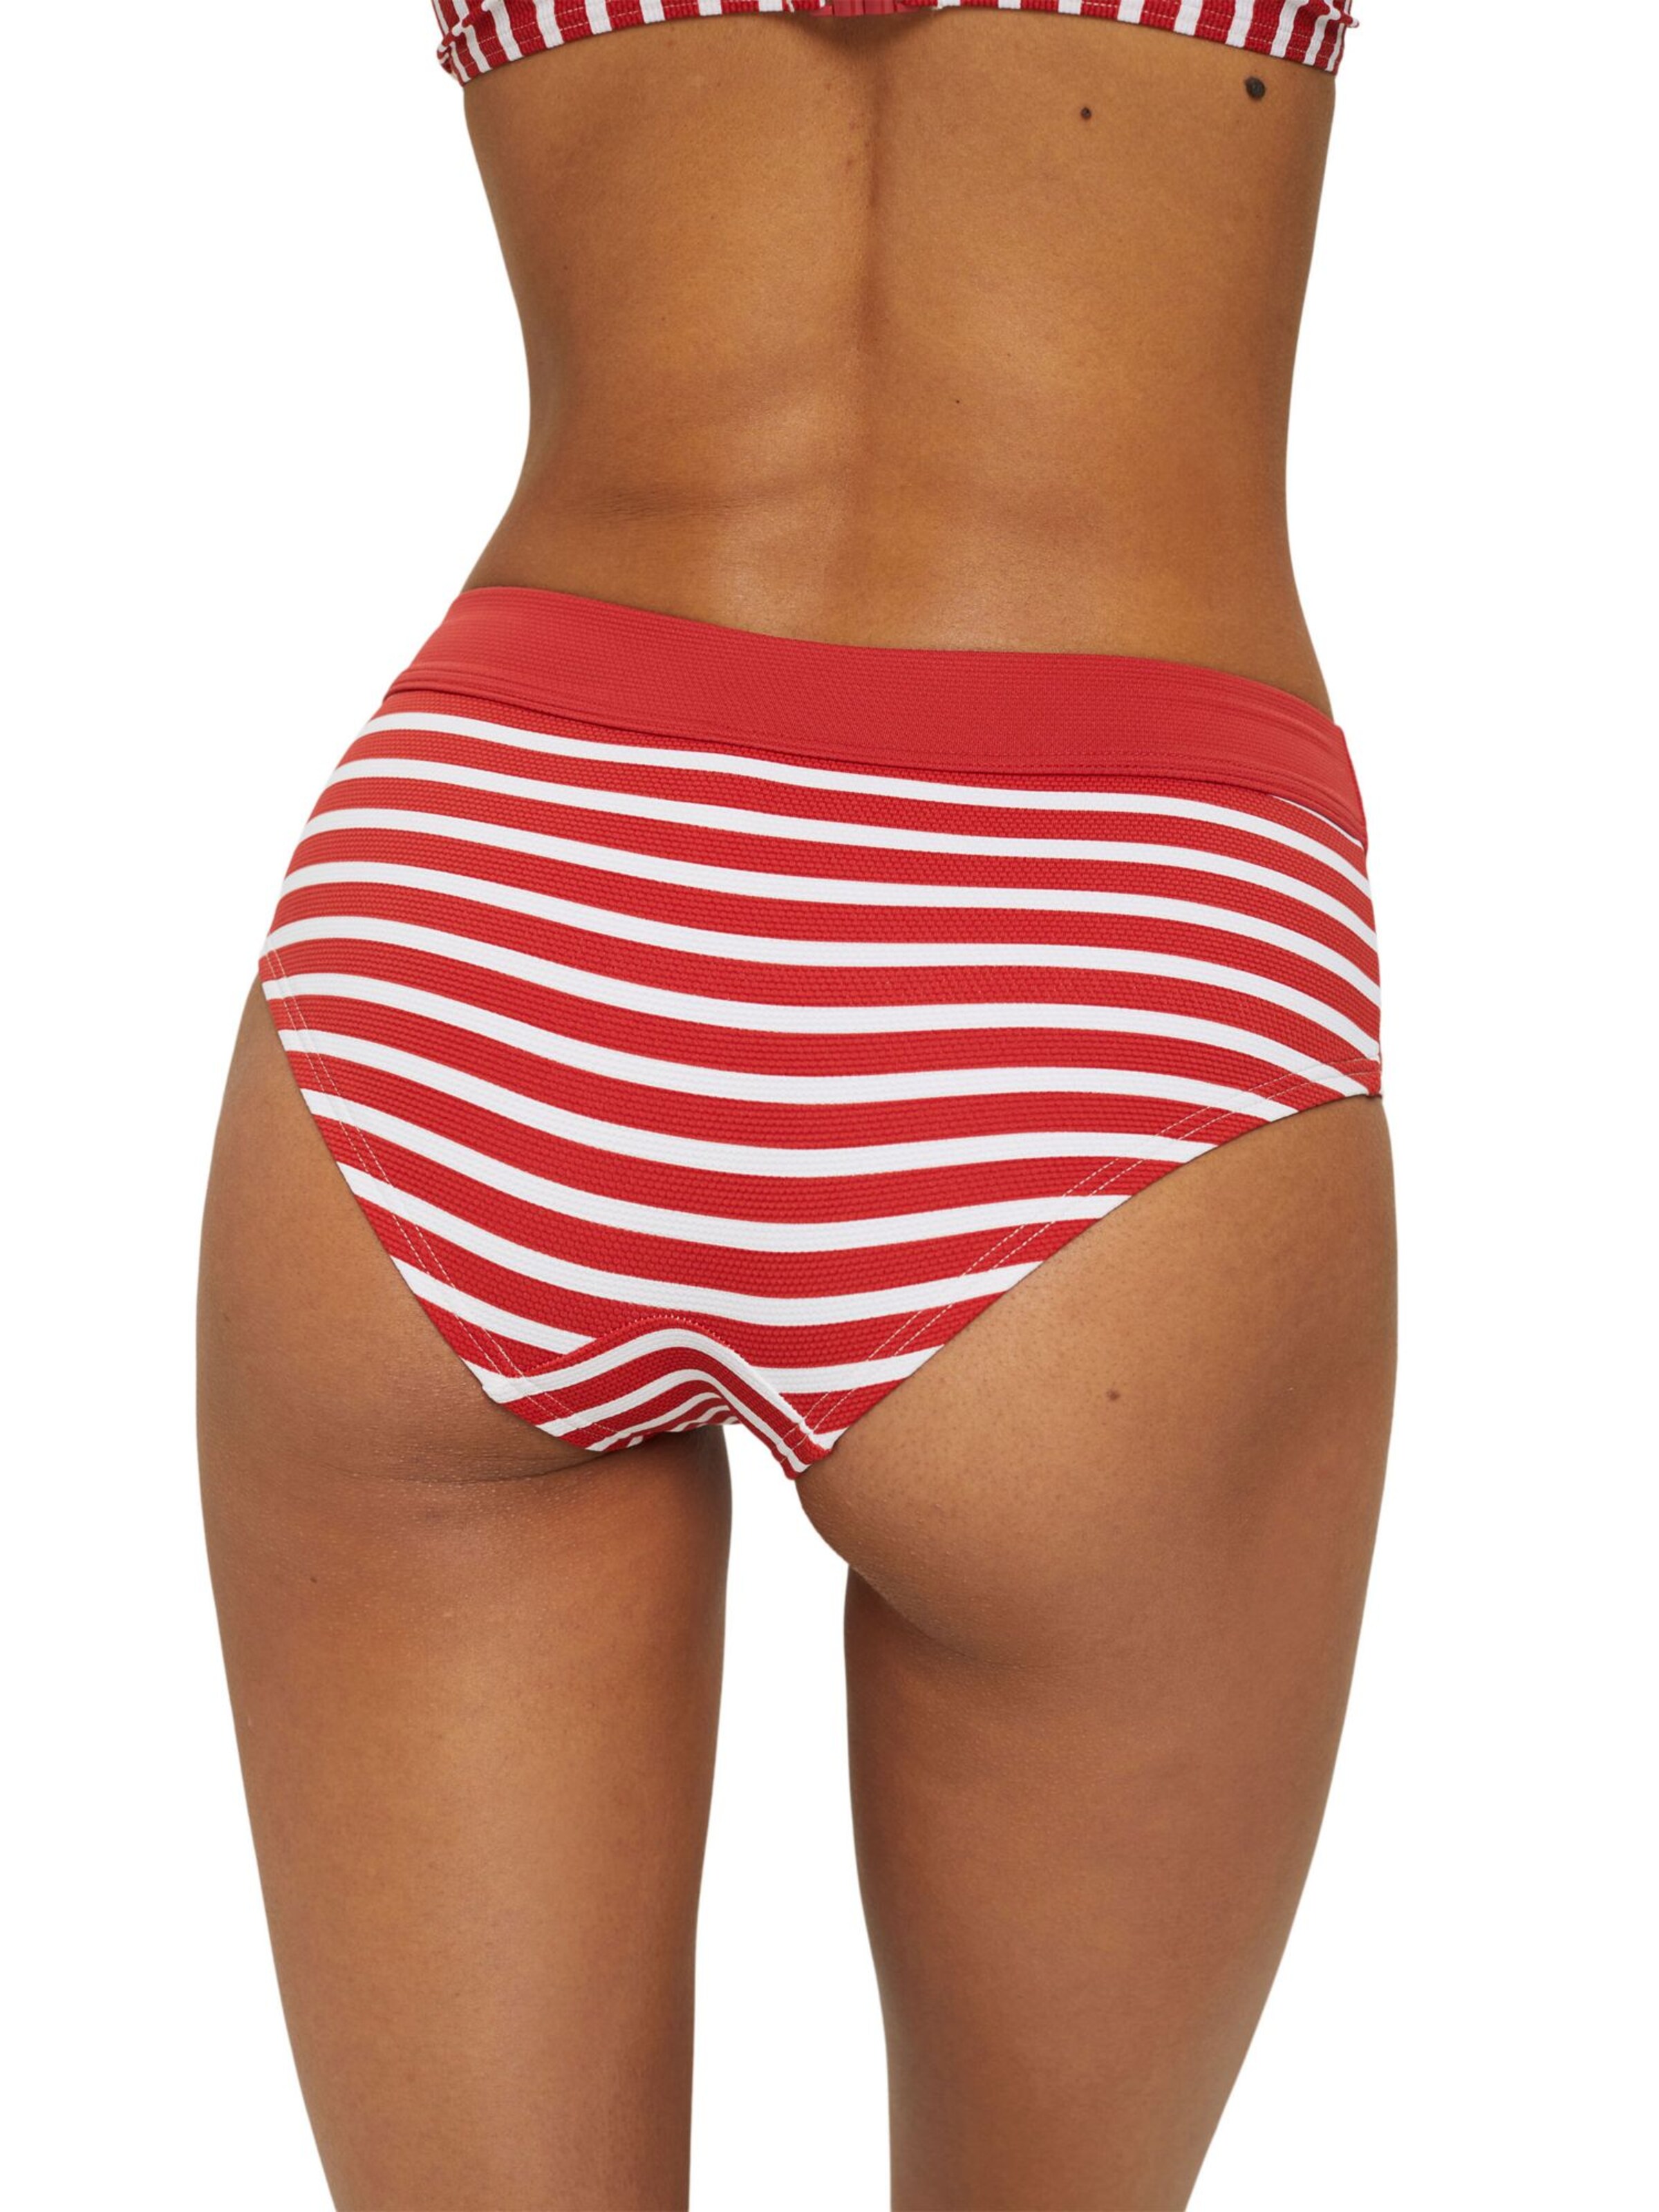 Frauen Bademode Esprit Bodywear Bikinihose in Rot, Weinrot - NN02472